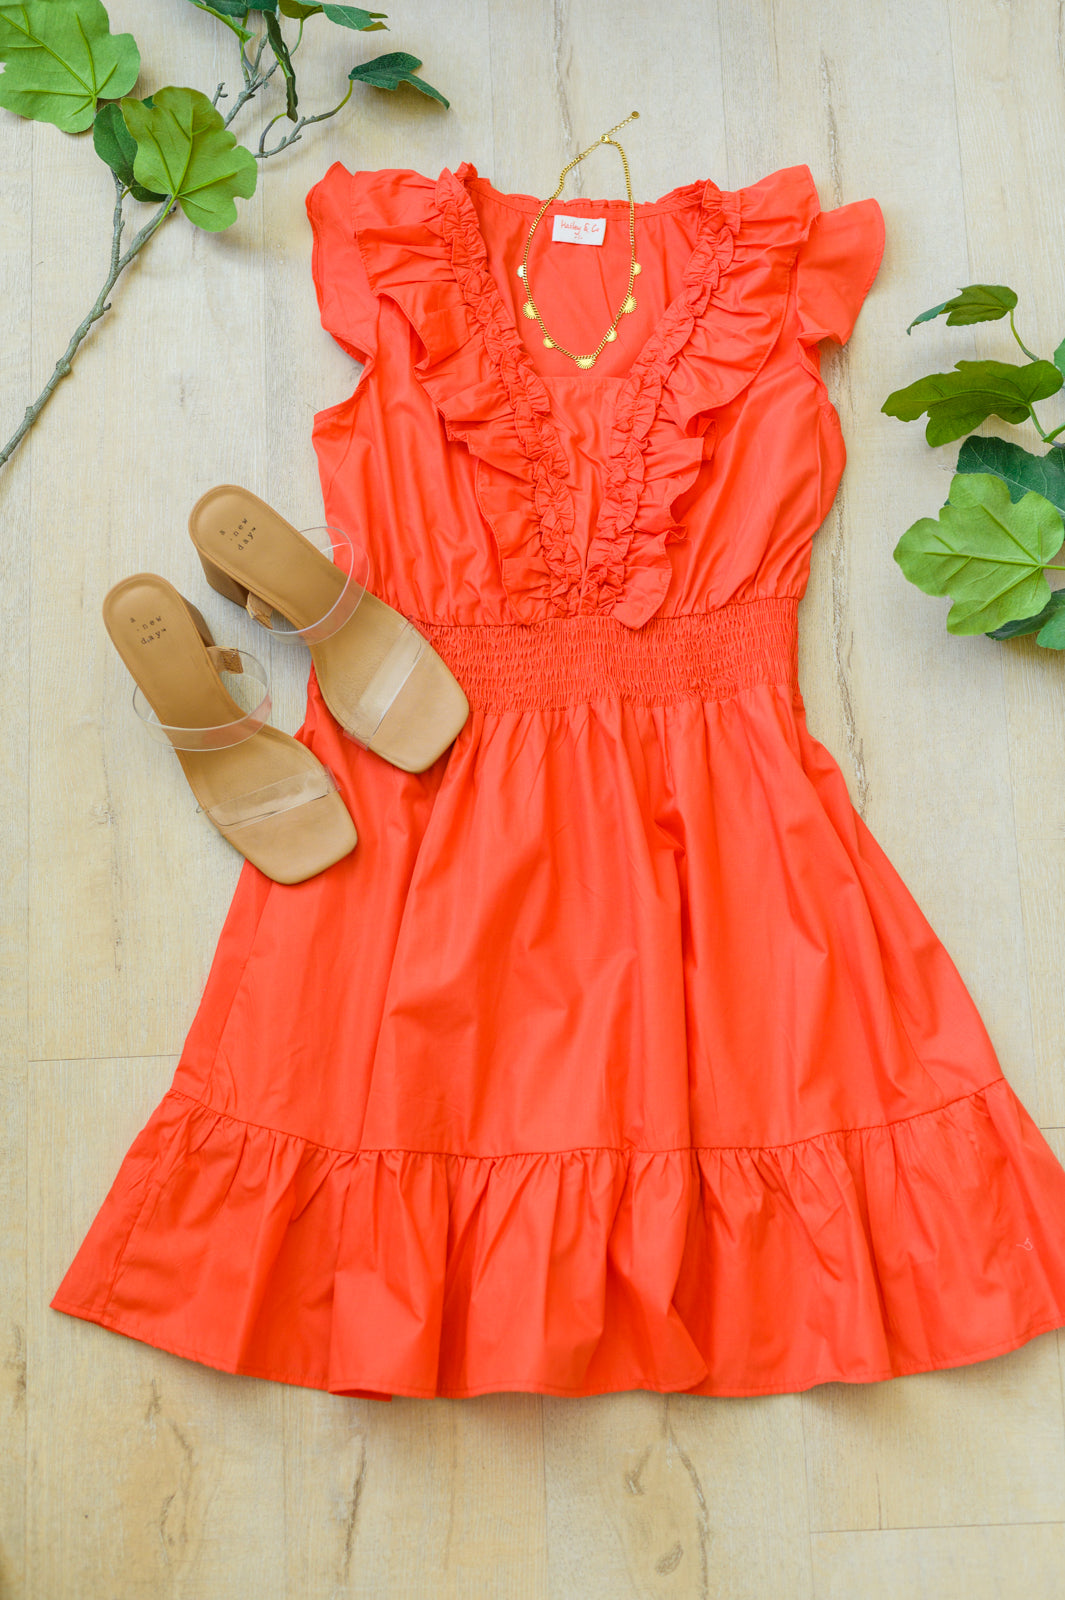 Orange You Gorgeous Flutter Sleeve Dress, SMALL left!